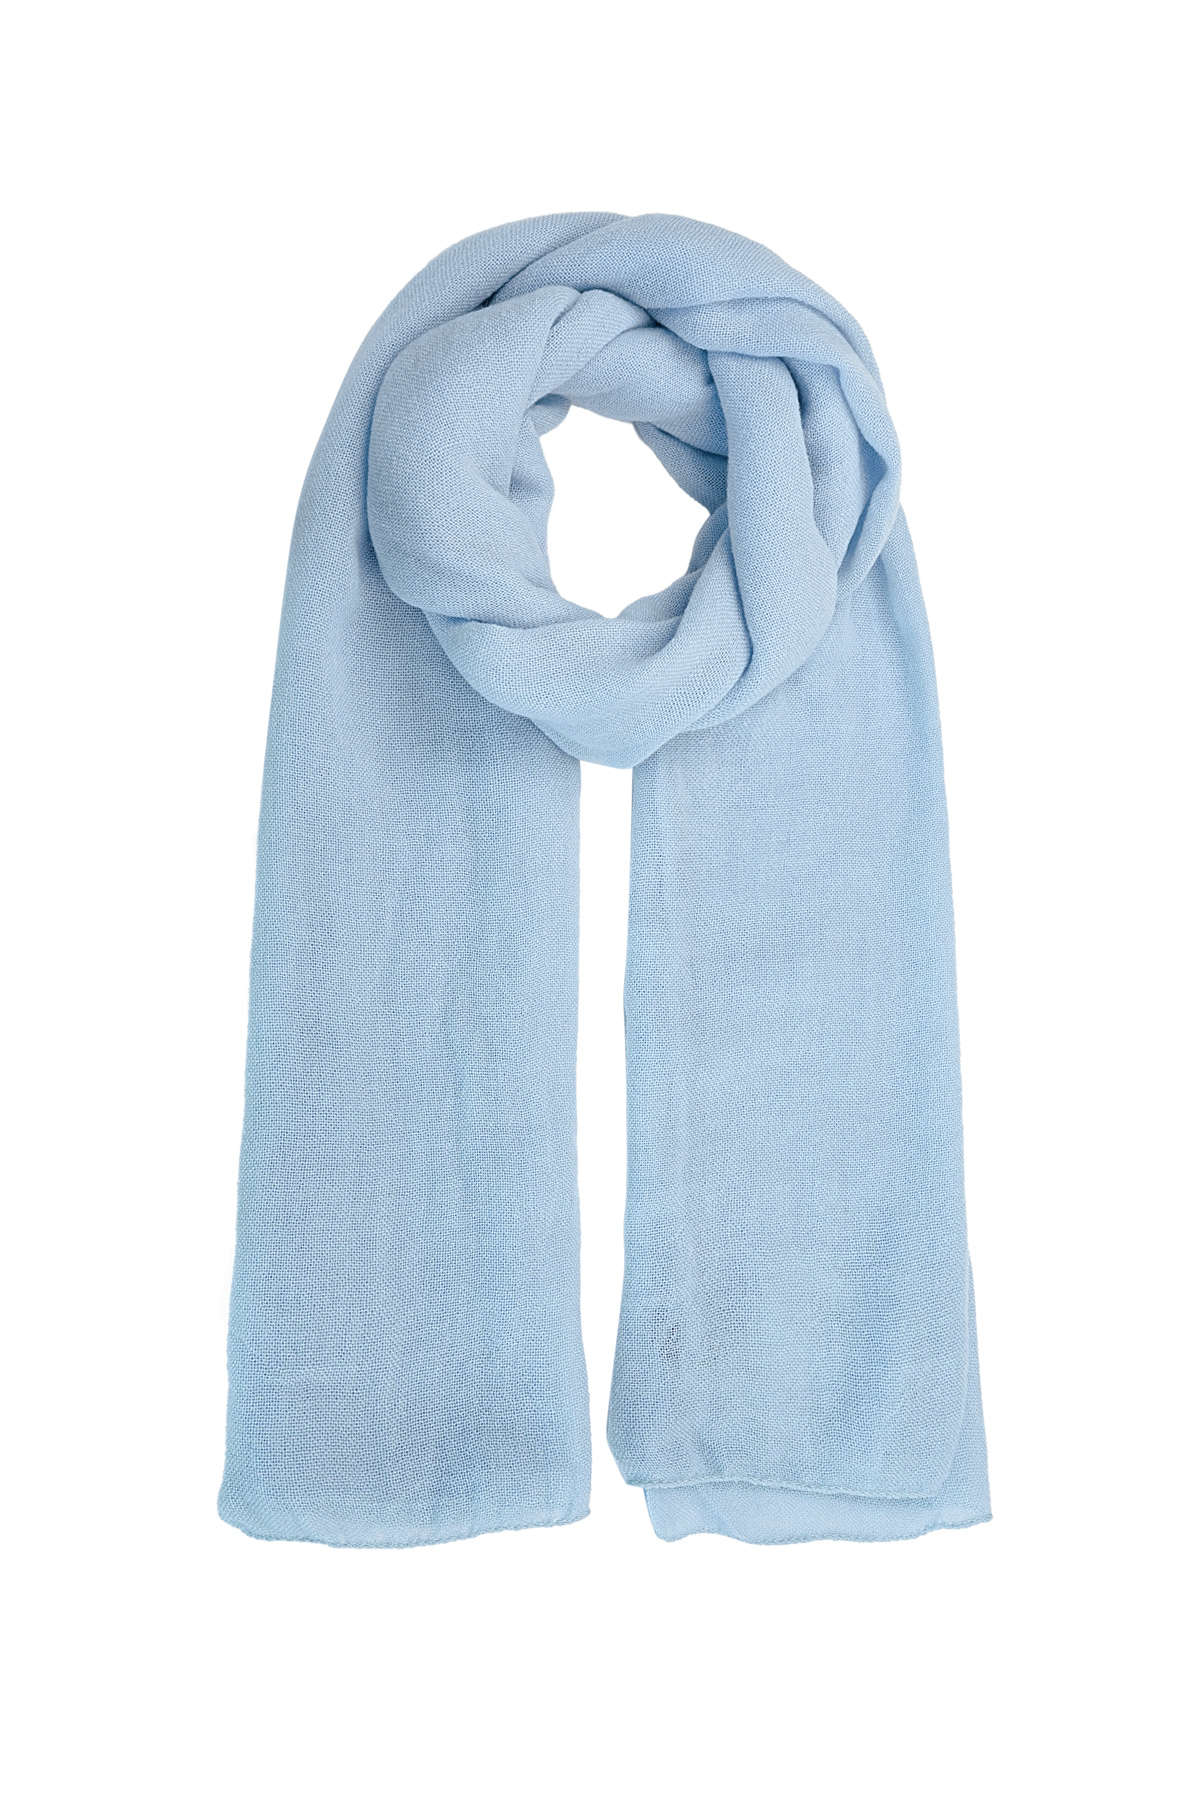 Sjaal effen kleur - lichtblauw h5 